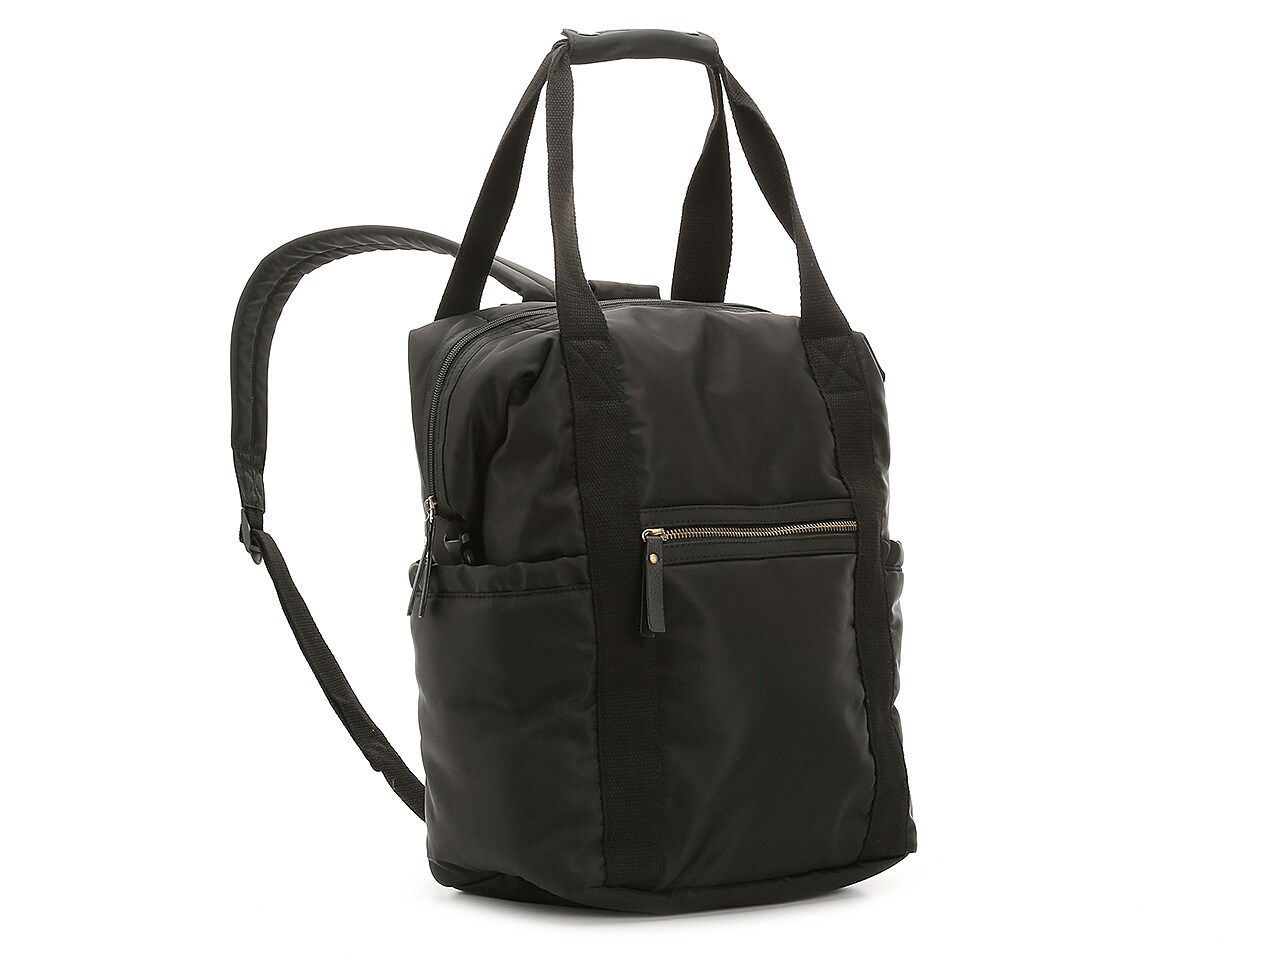 Madden Girl Booker Backpack Women's Handbags & Accessories | DSW